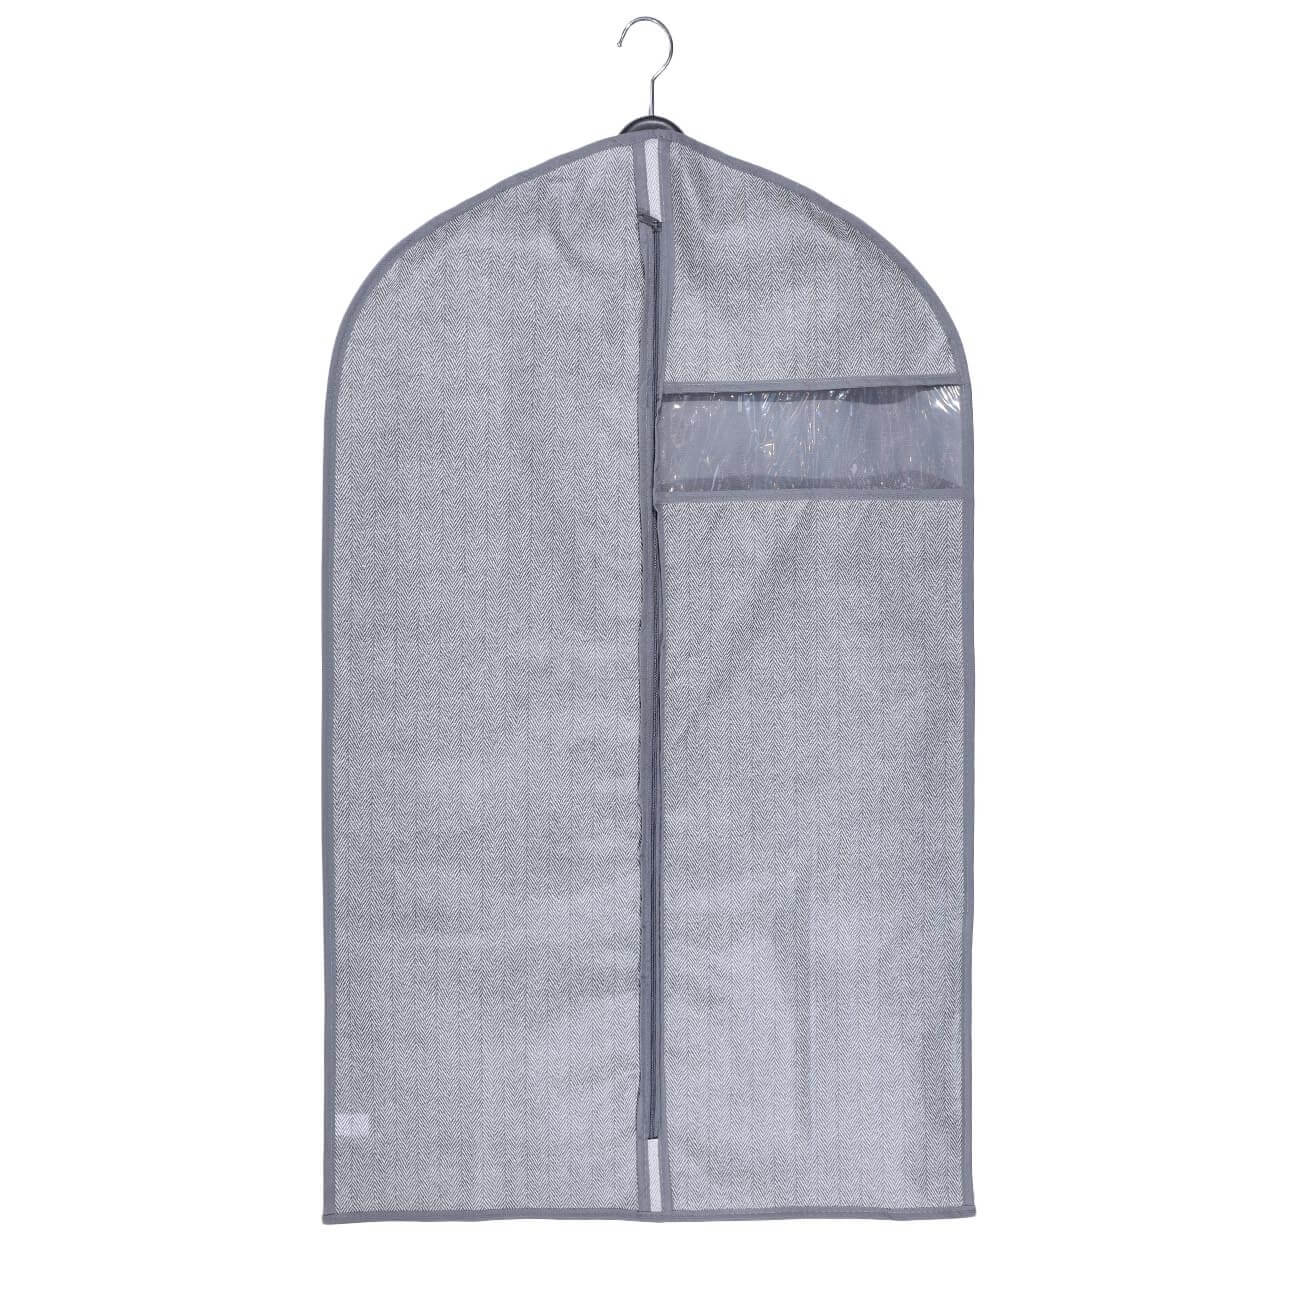 Чехол для одежды, 60х100 см, текстиль/ПВХ, серый, Pedant new чехол для одежды bikson